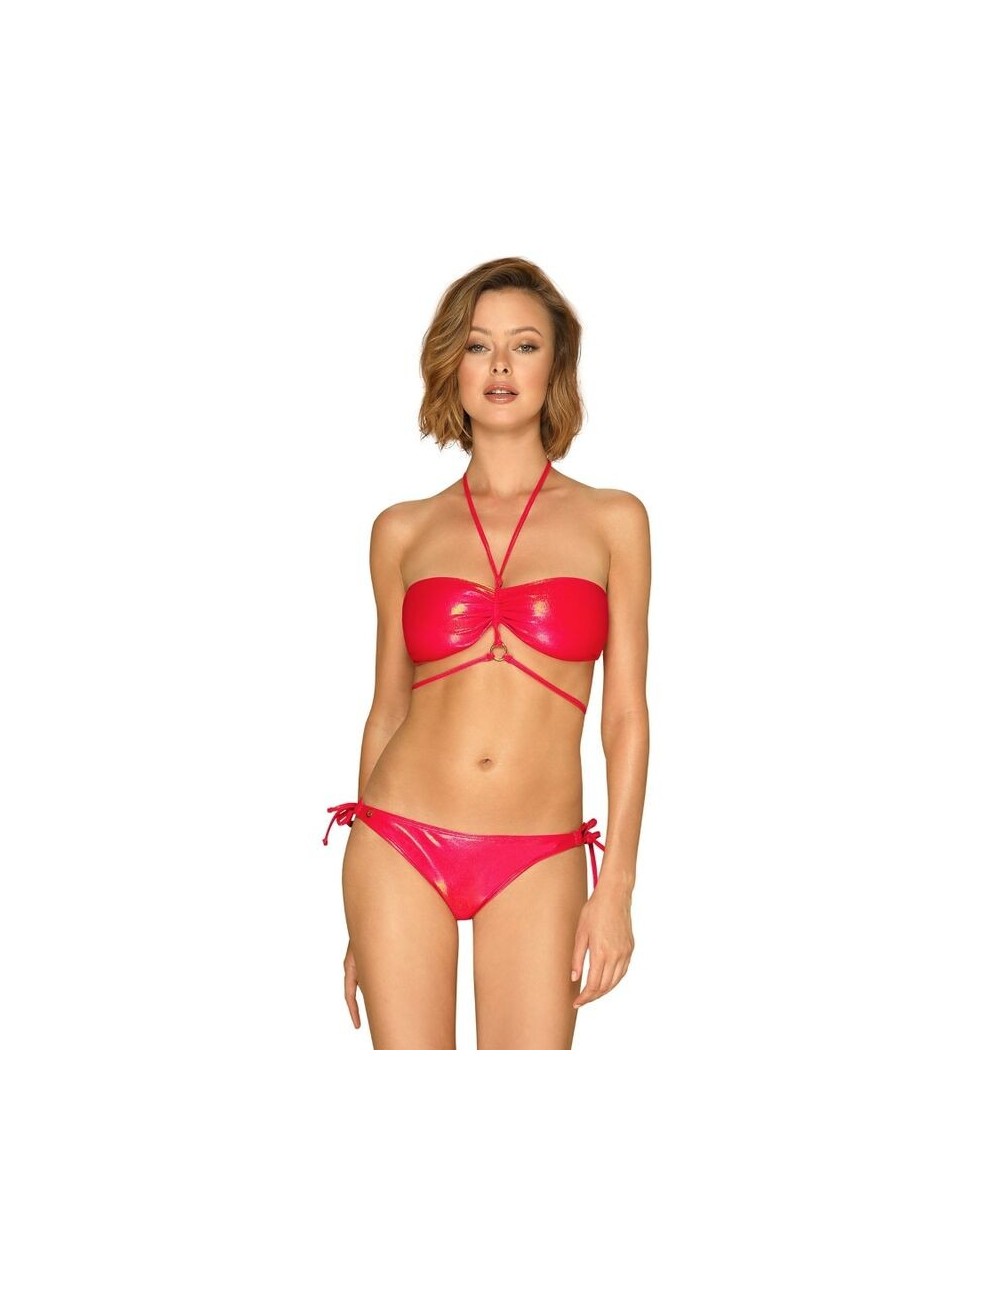 Lingerie - Maillots de bain et tenues de plage - Obsessif - coralya bikini s - Obsessive Summer